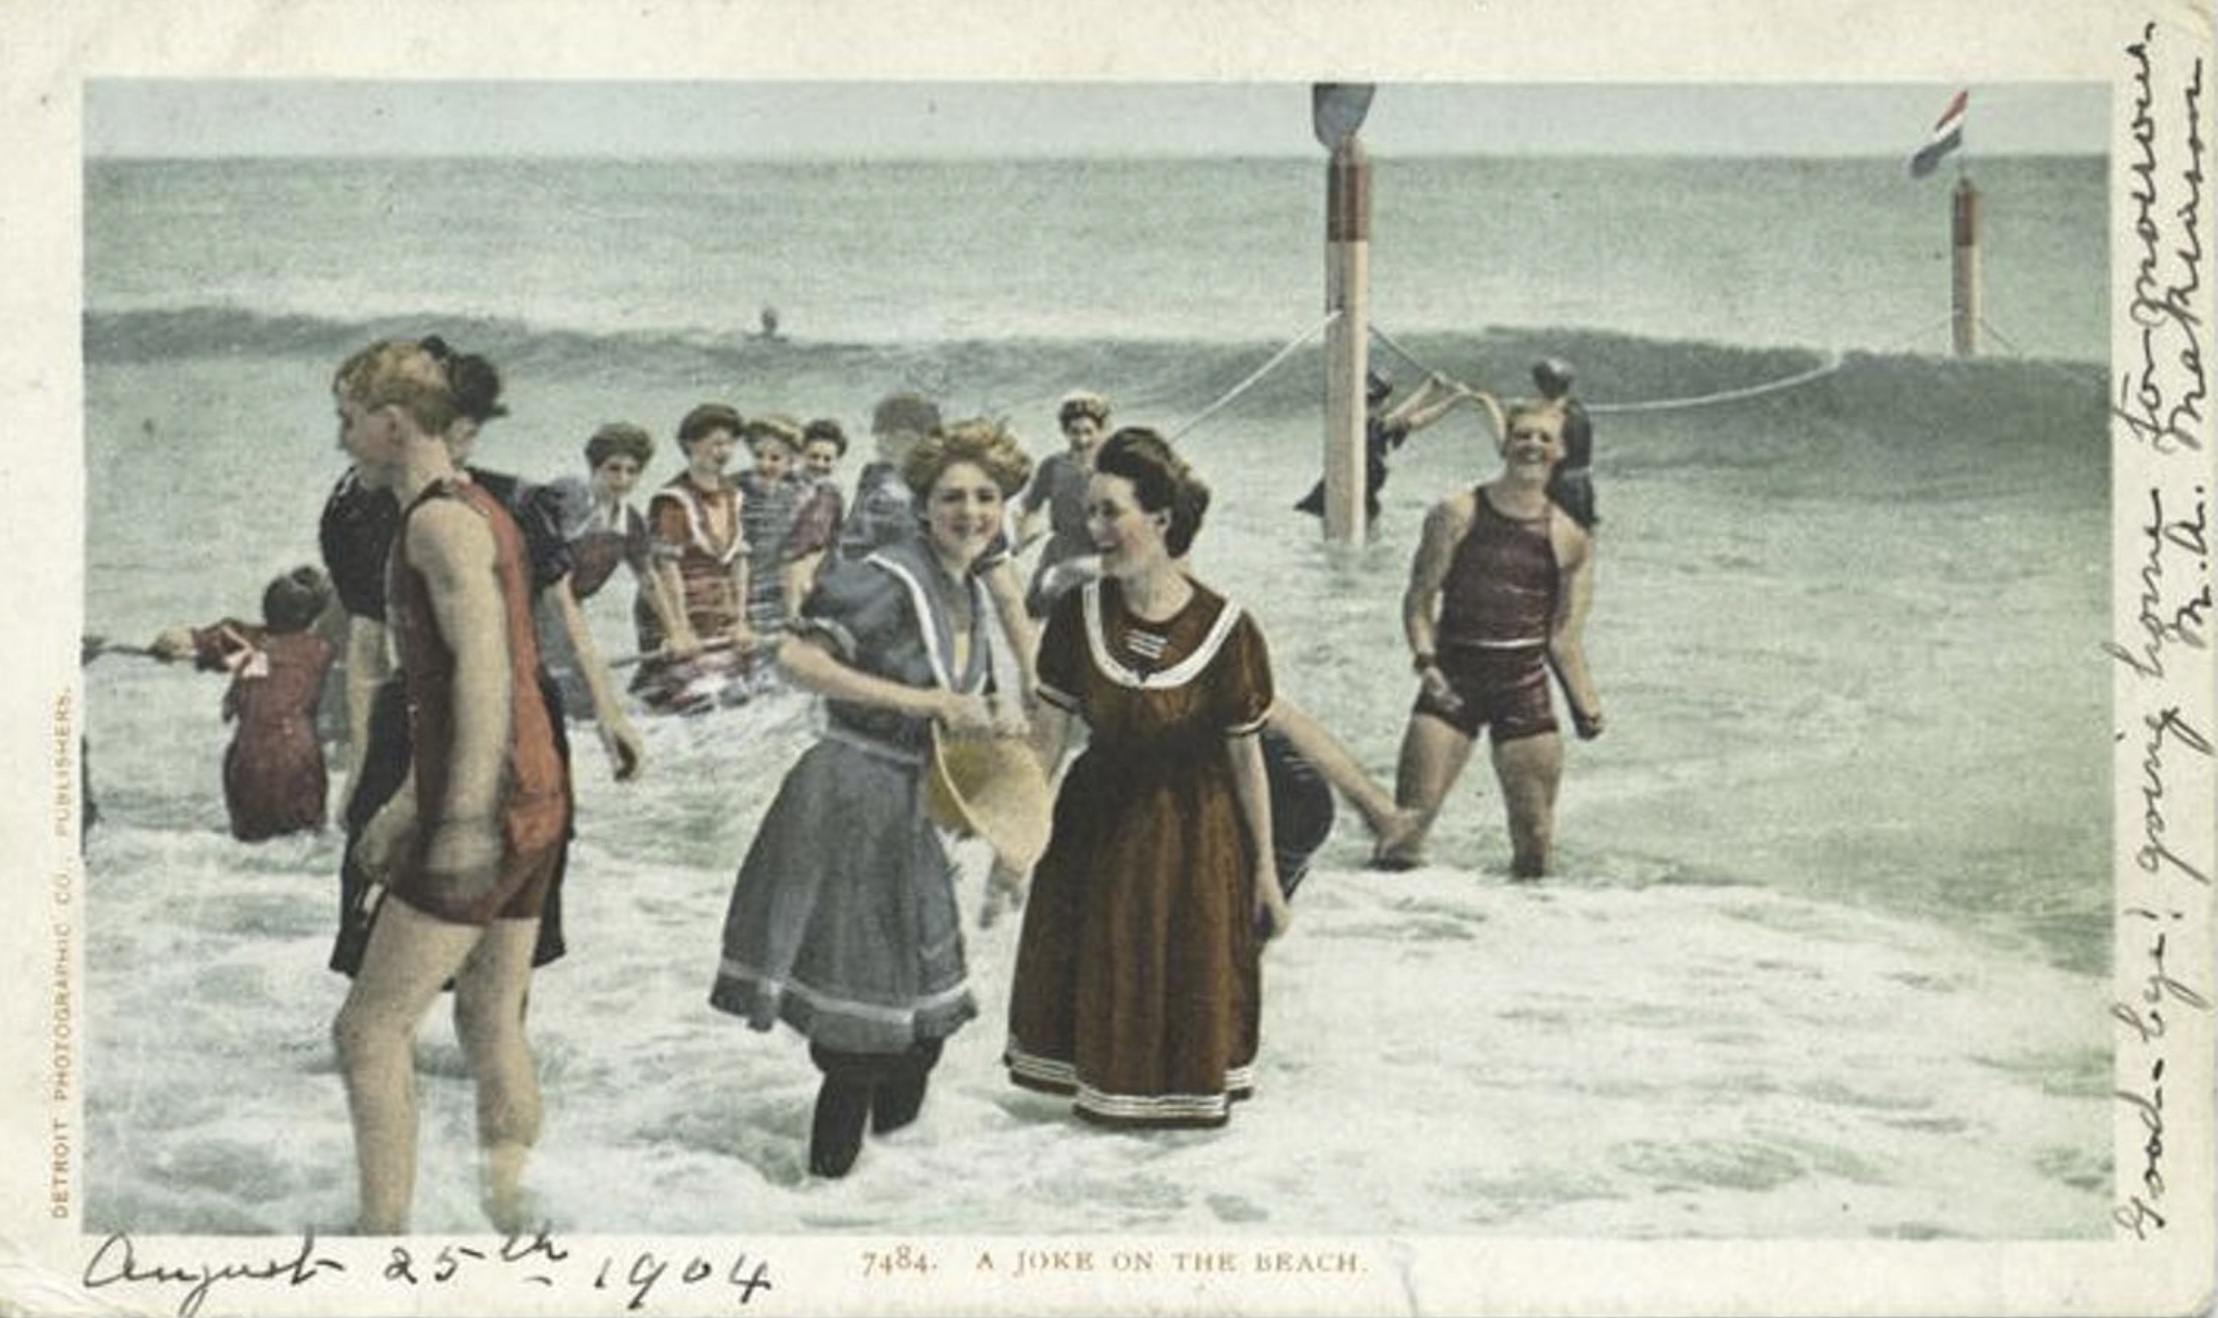 La saga du maillot de bain. A Joke on the Beach. Carte postale de 1904. New-York Public Library.